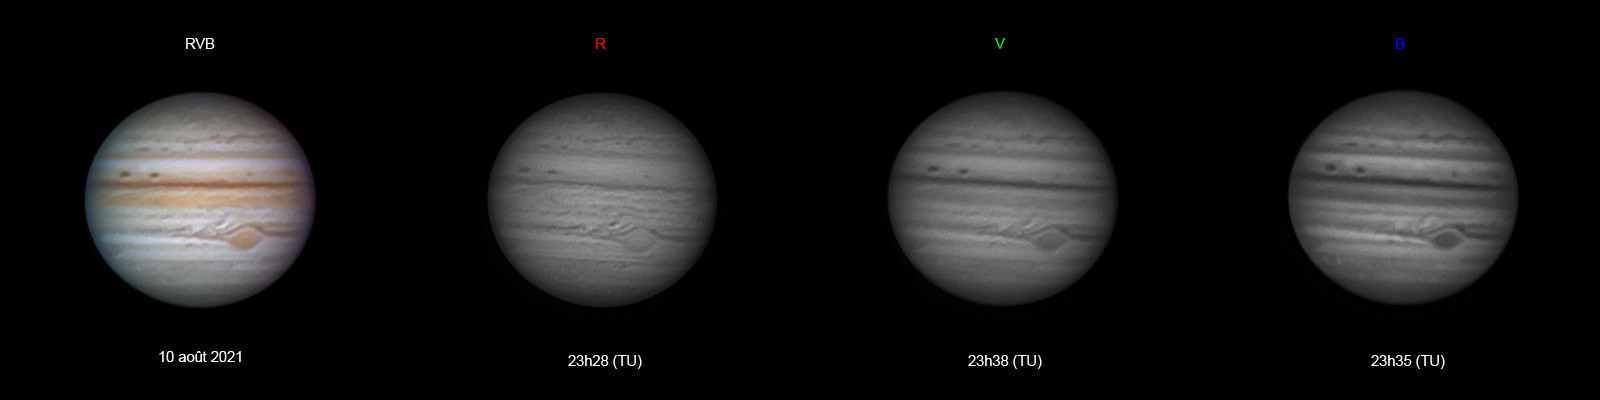 Jupiter-20210811-ba_RVB-Planche-PSAS.jpg.ac2c1903a02ce43d4c56bc2ba2610be1.jpg